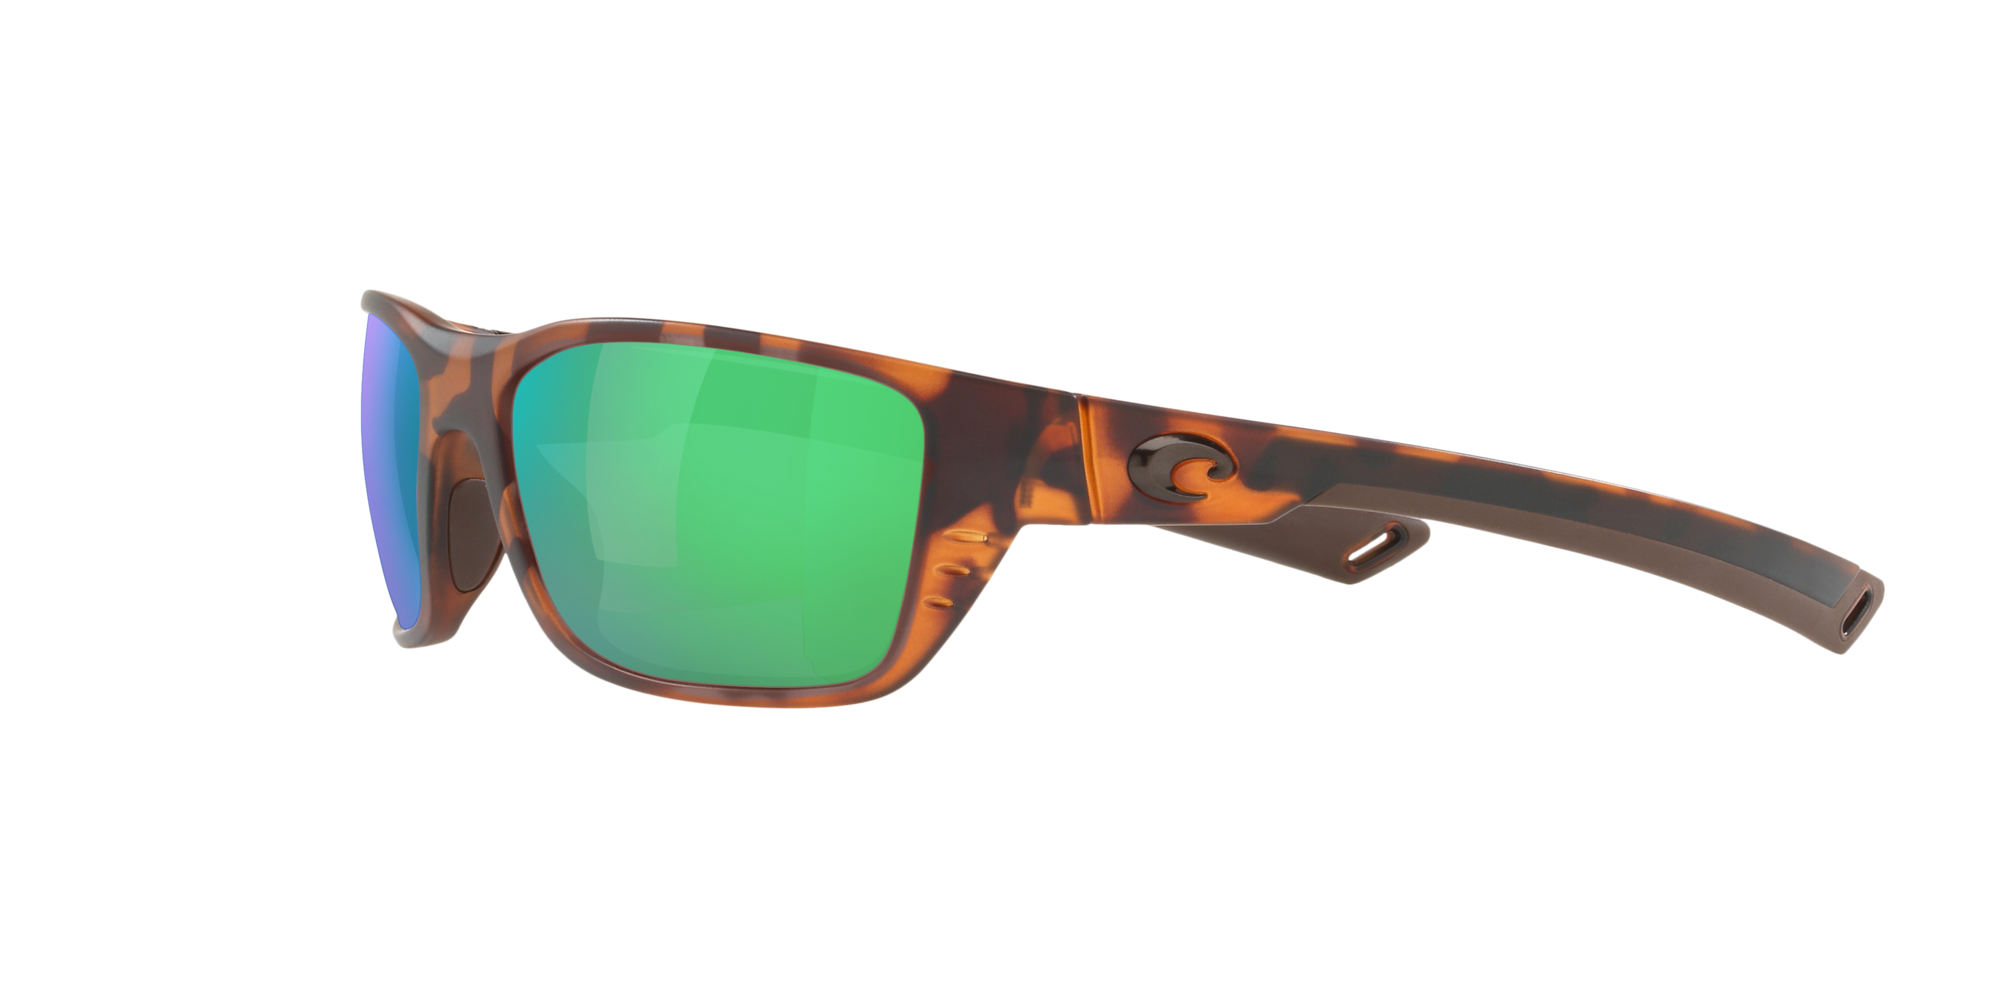 Costa Del Mar Whitetip Sunglasses Polarized Retro Tortoise/Amber 580P White Tip 